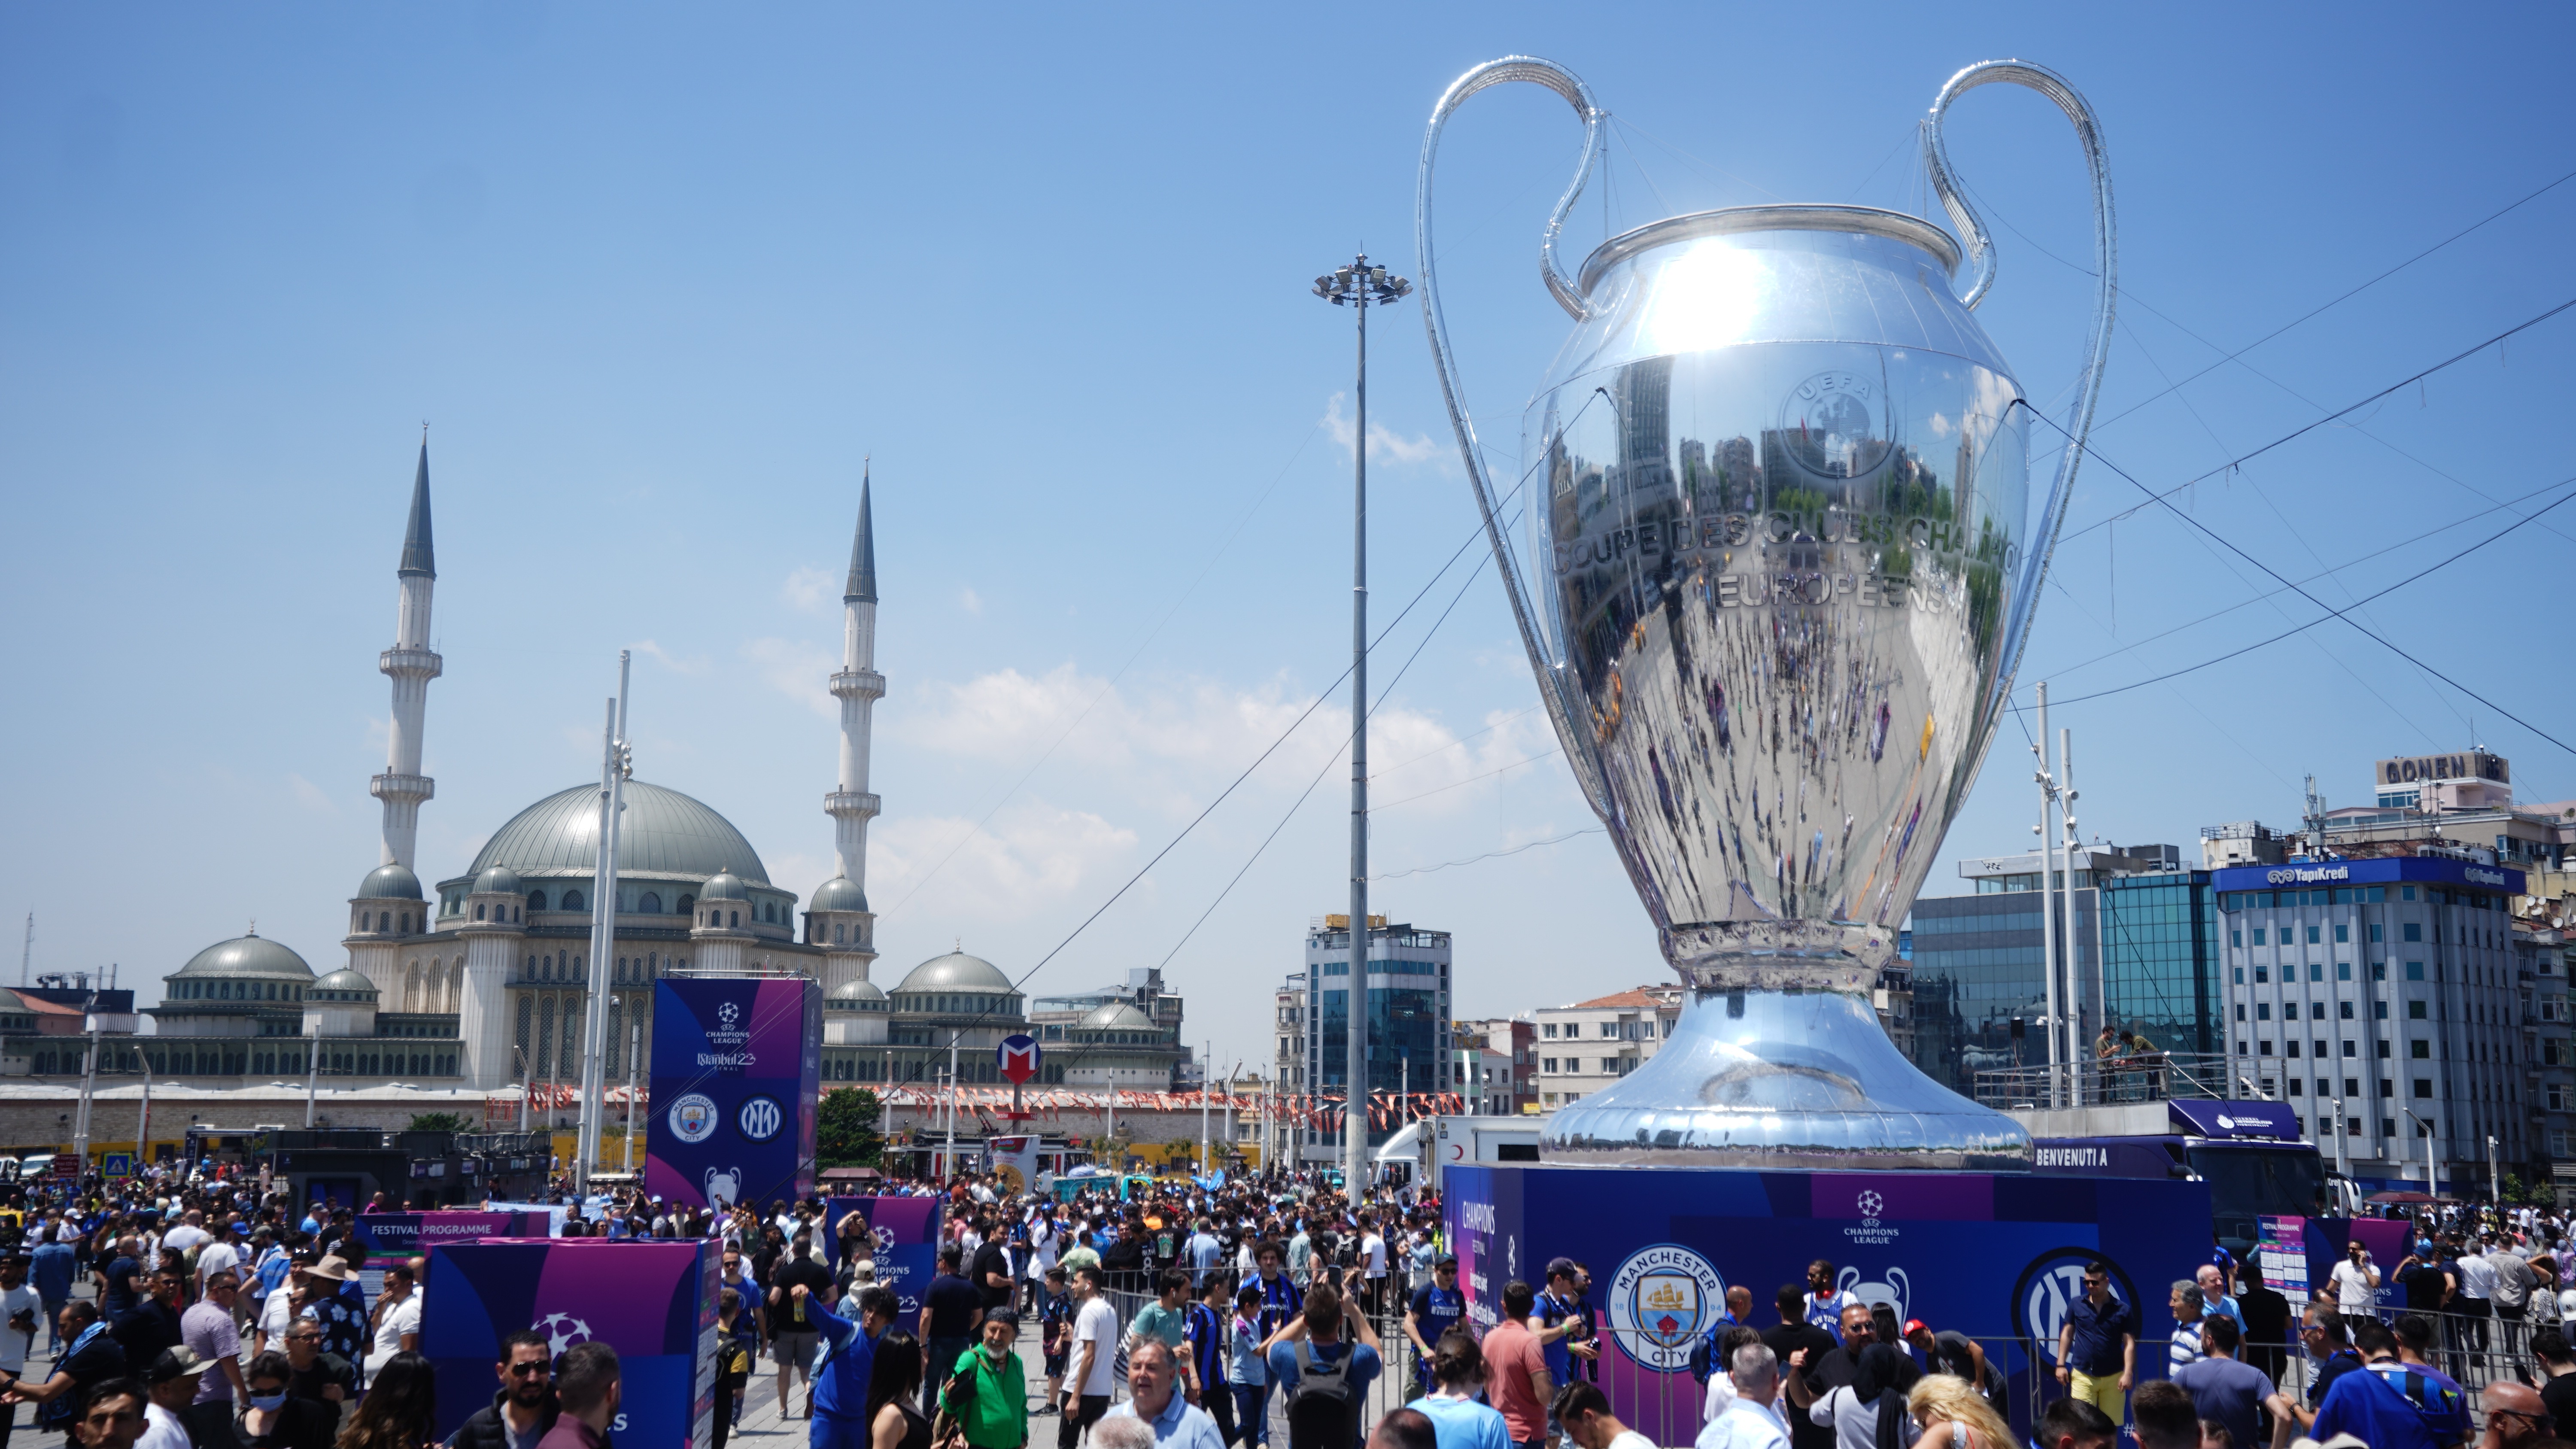 ISTANBUL - the UEFA Champions League trophy, Coupe des clubs